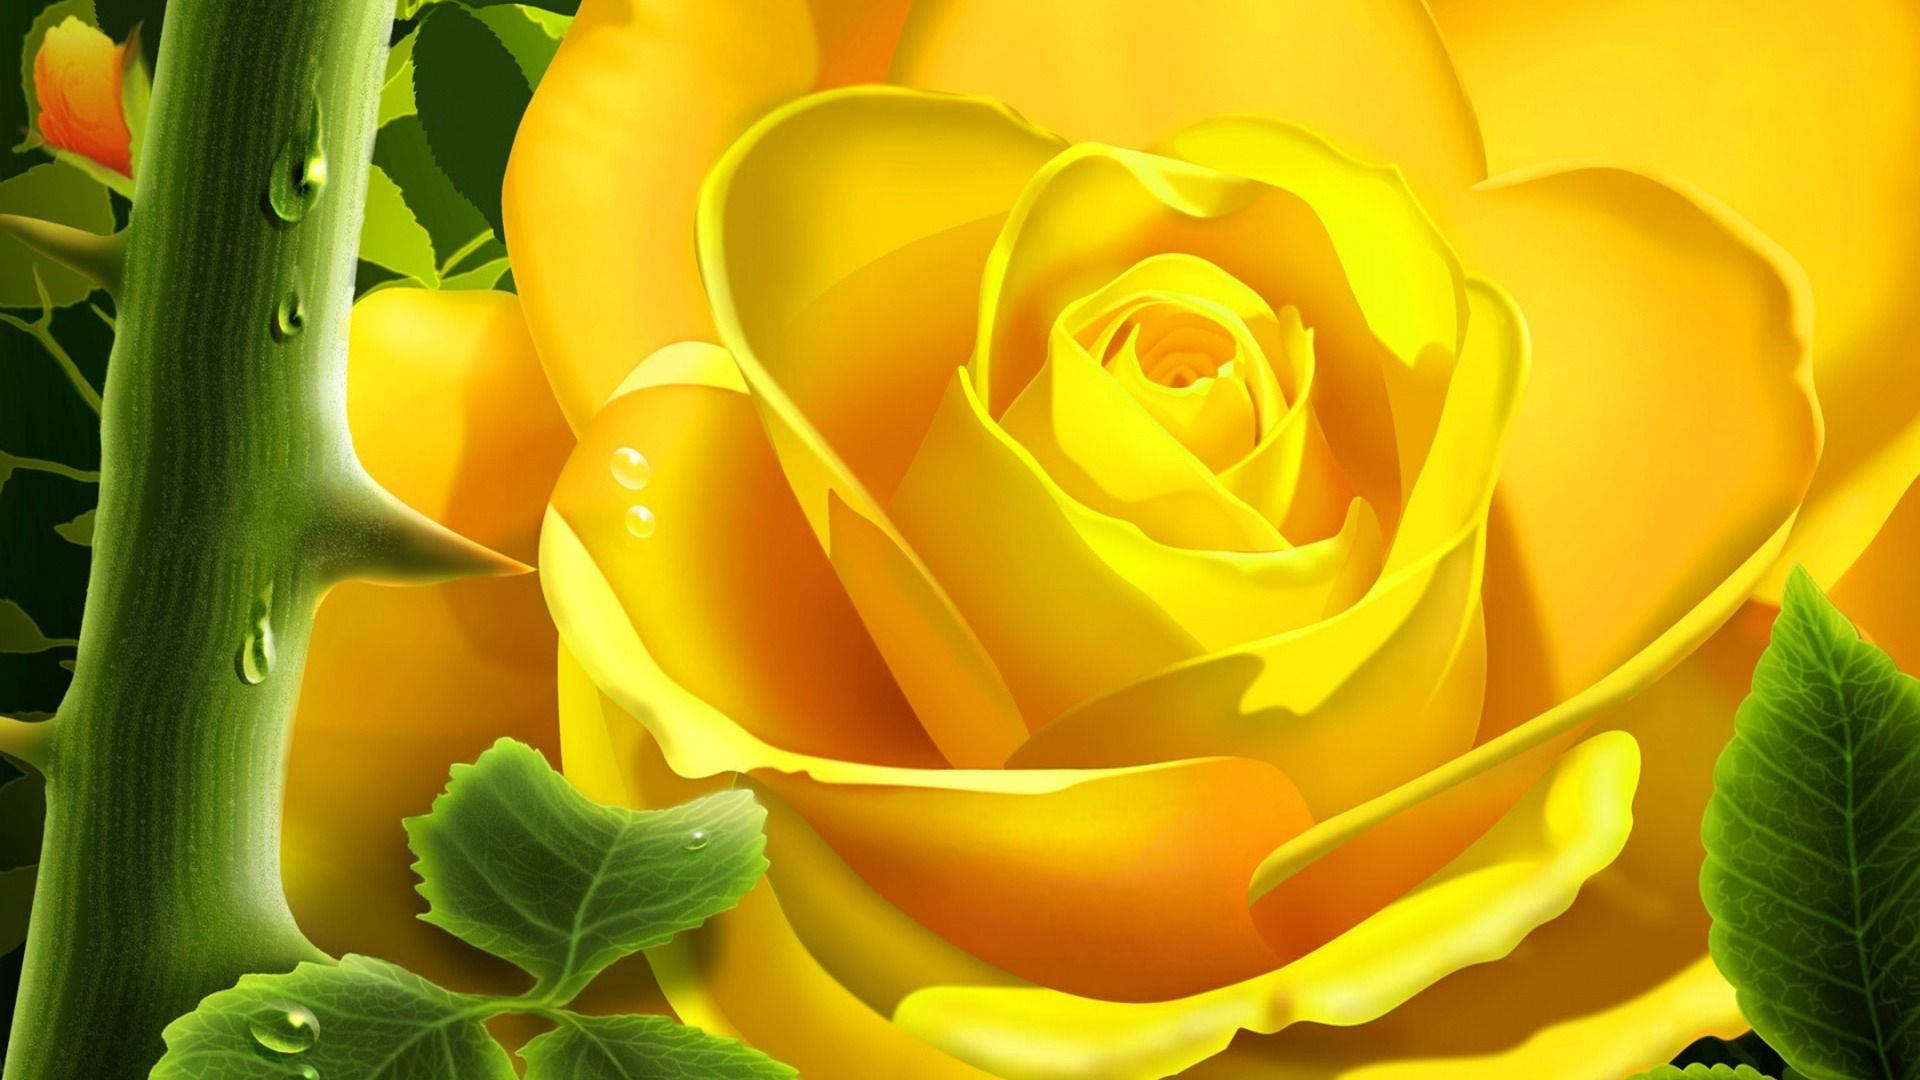 Pastel Yellow Rose Digital Painting Background